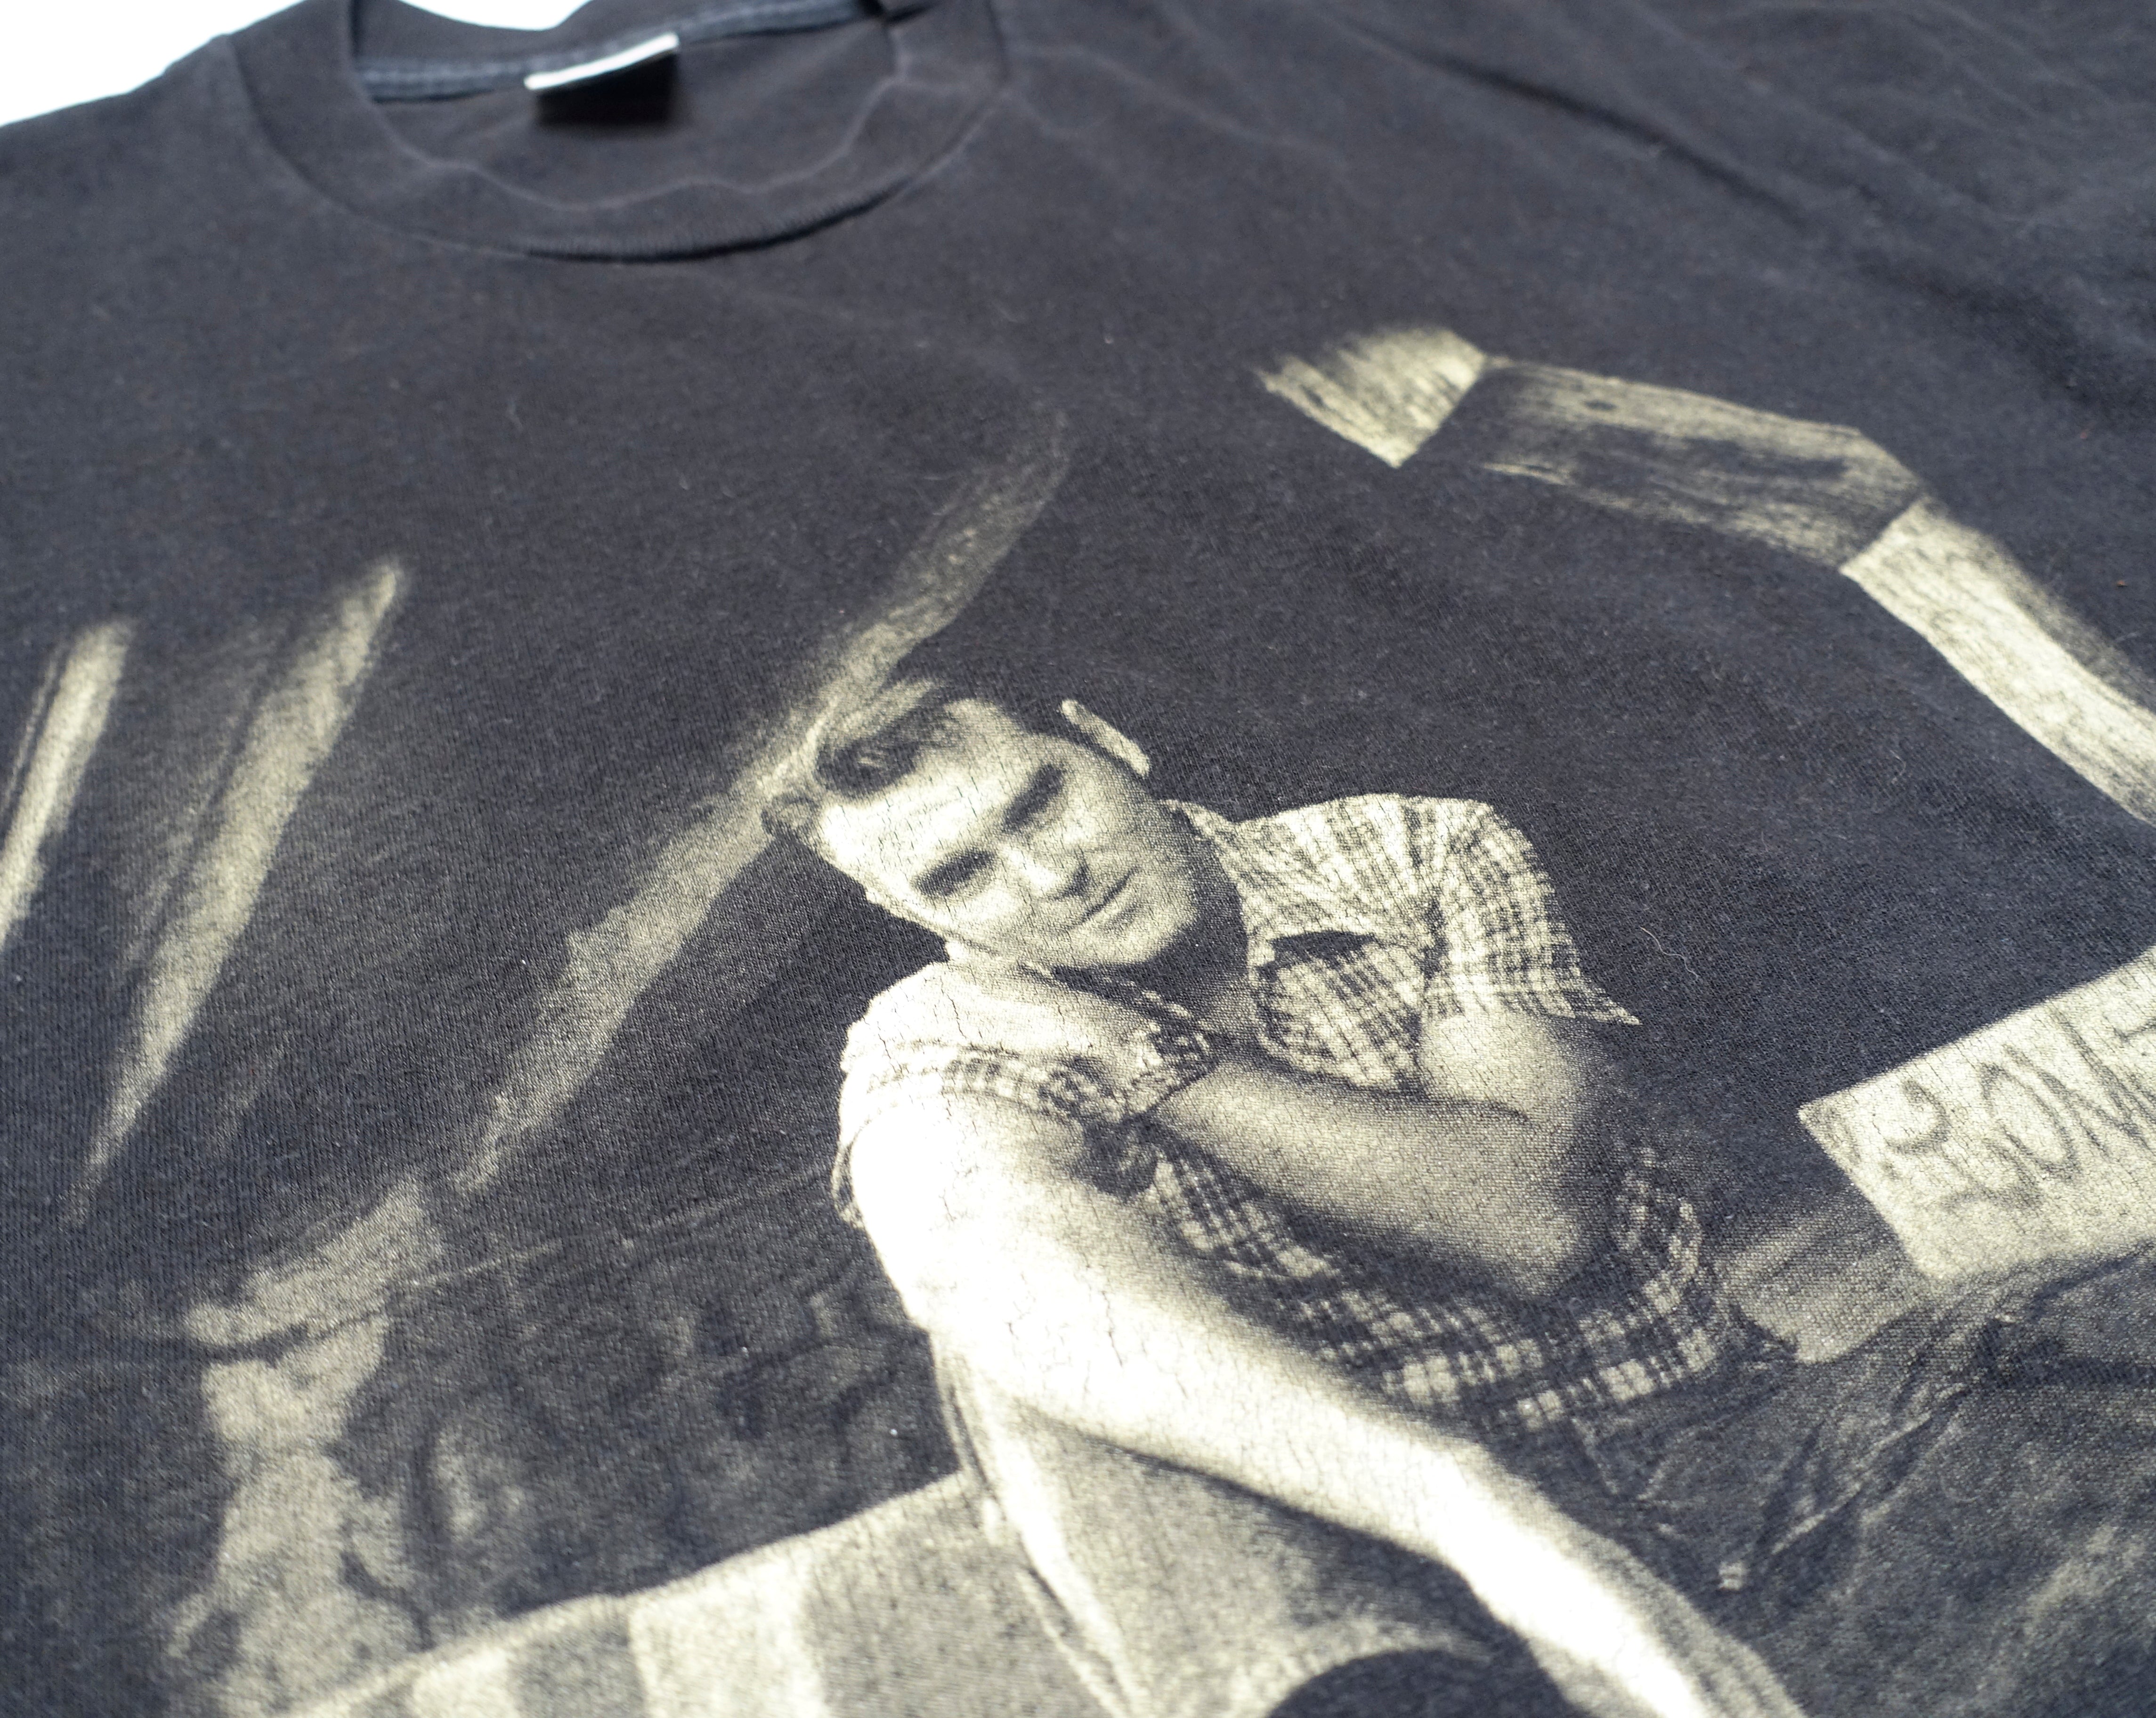 Morrissey - Sitting Moz Maladjusted 1997 US Tour Shirt Size Large